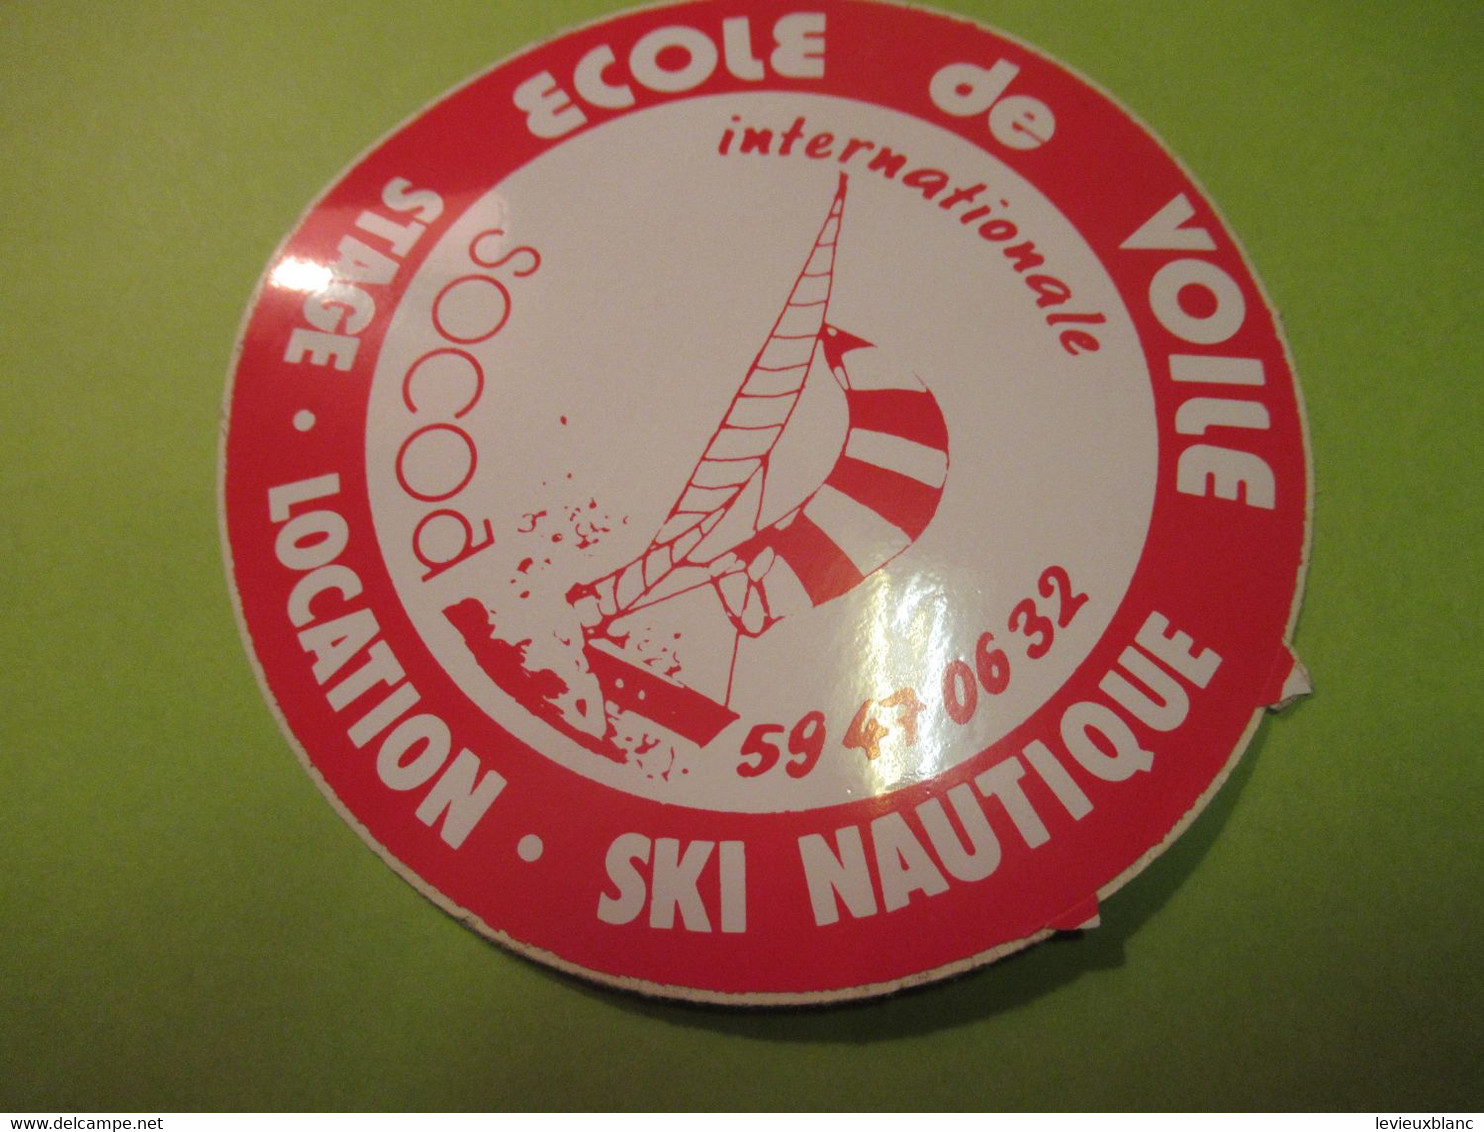 SPORT/ECOLE De VOILE Internationale/ Stage Location Ski Nautique/ MAC Line/ Vers 1970-1980     ACOL187 - Stickers